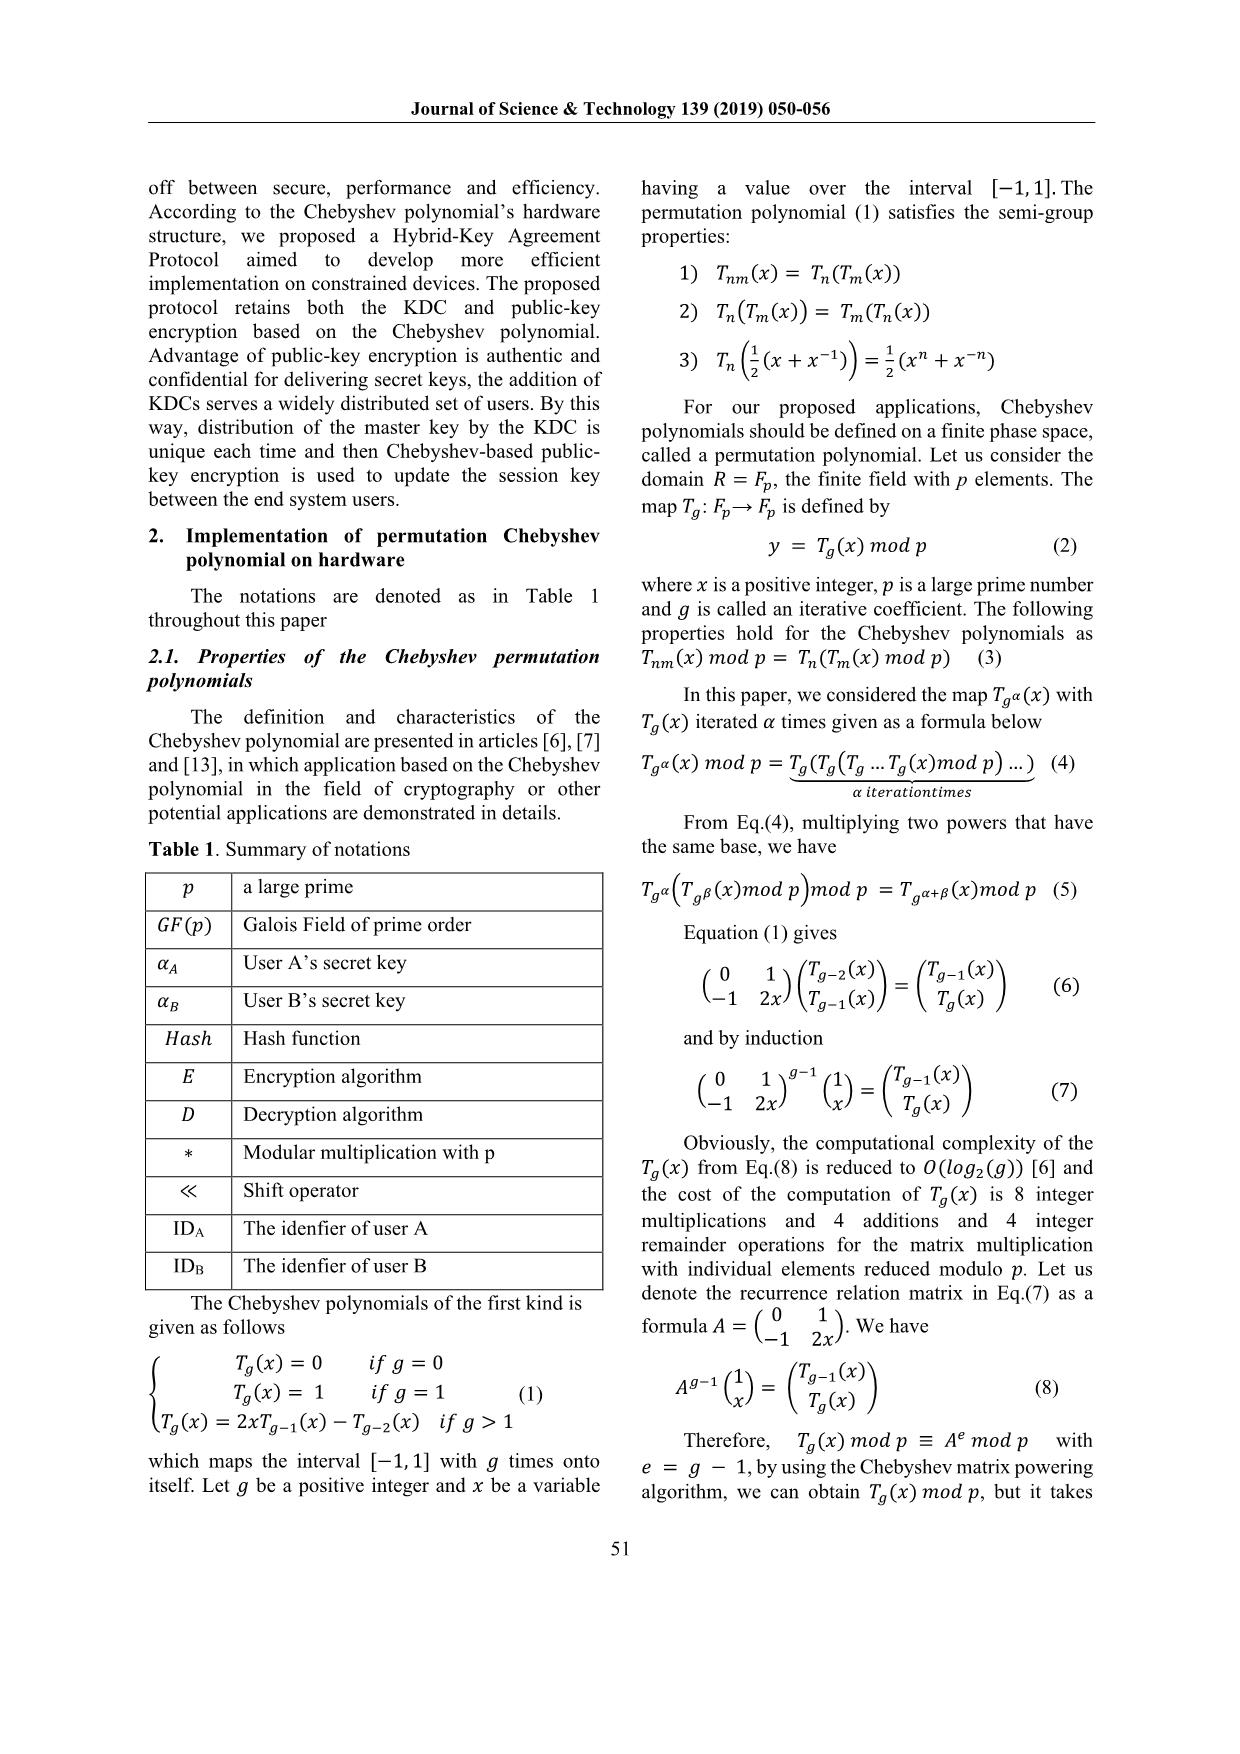 Hybrid - Key agreement protocol based on chebyshev polynomials trang 2